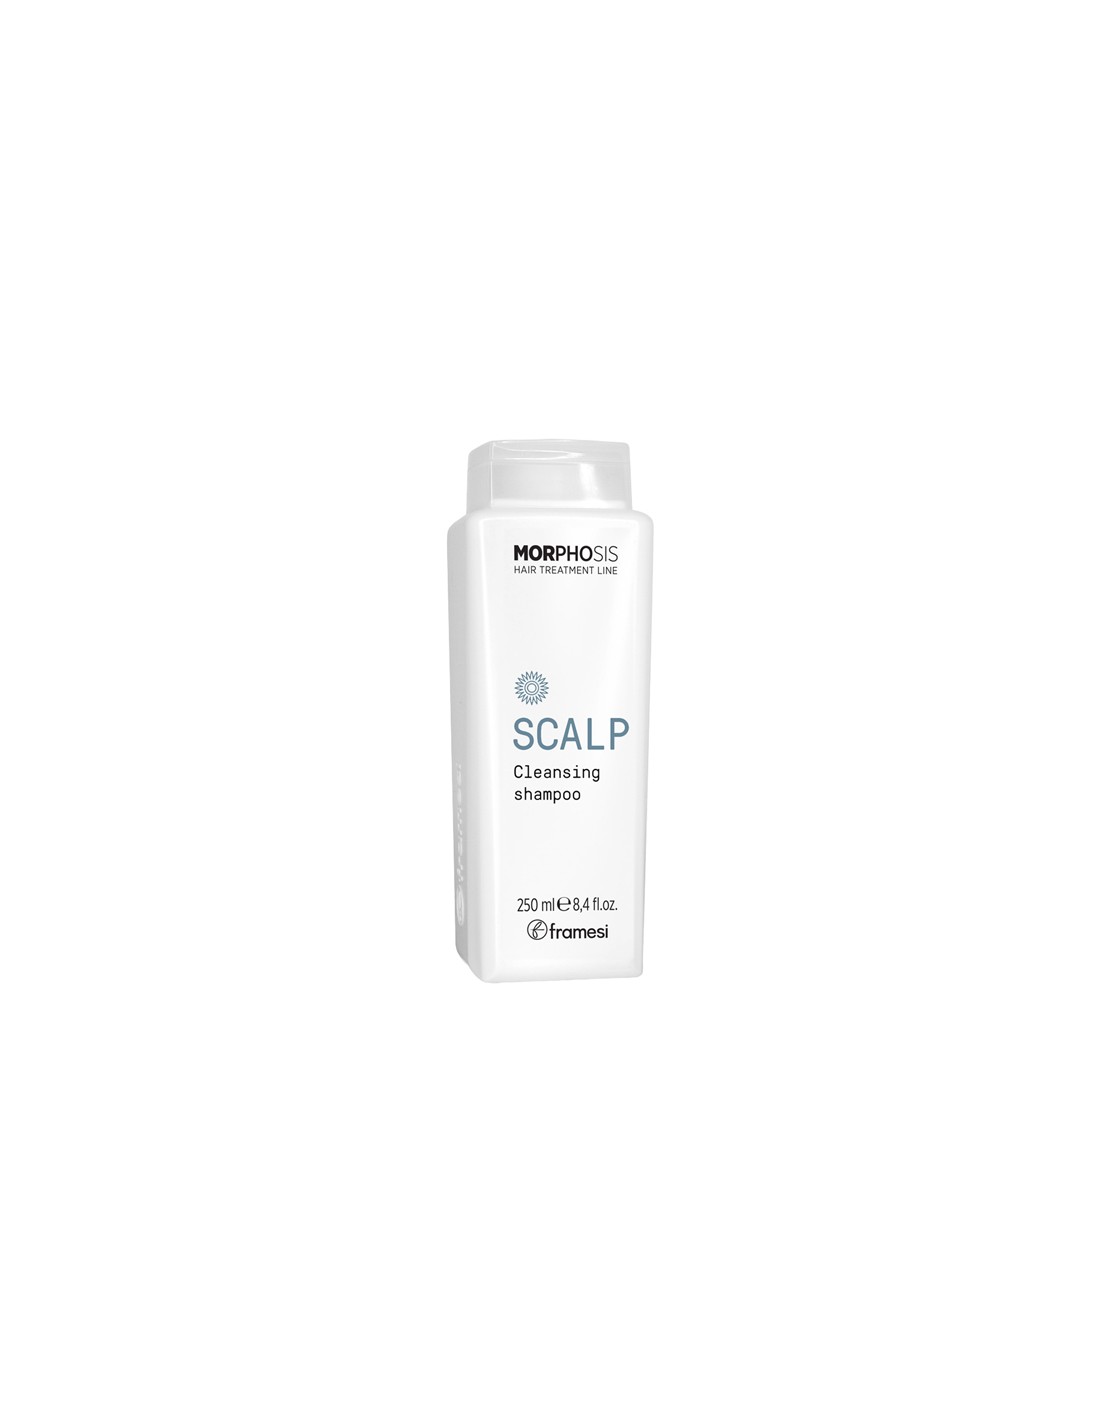 Morphosis Scalp Cleansing Shampoo